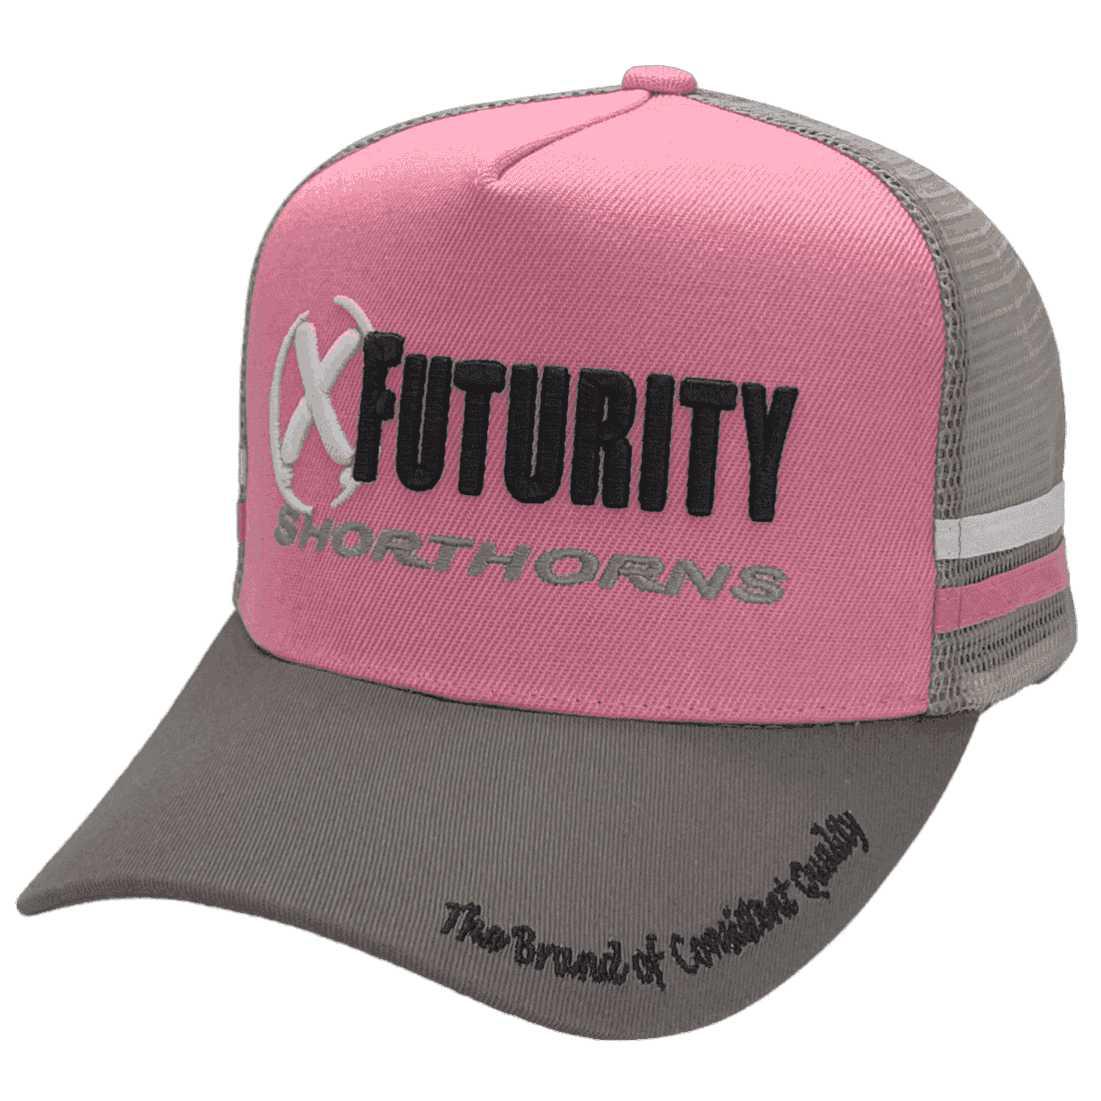 X Futurity Pastoral Kenebri NSW HP Midrange Aussie Trucker Hat with Australian Head Fit Crown and 2 Side Bands Pink Grey White